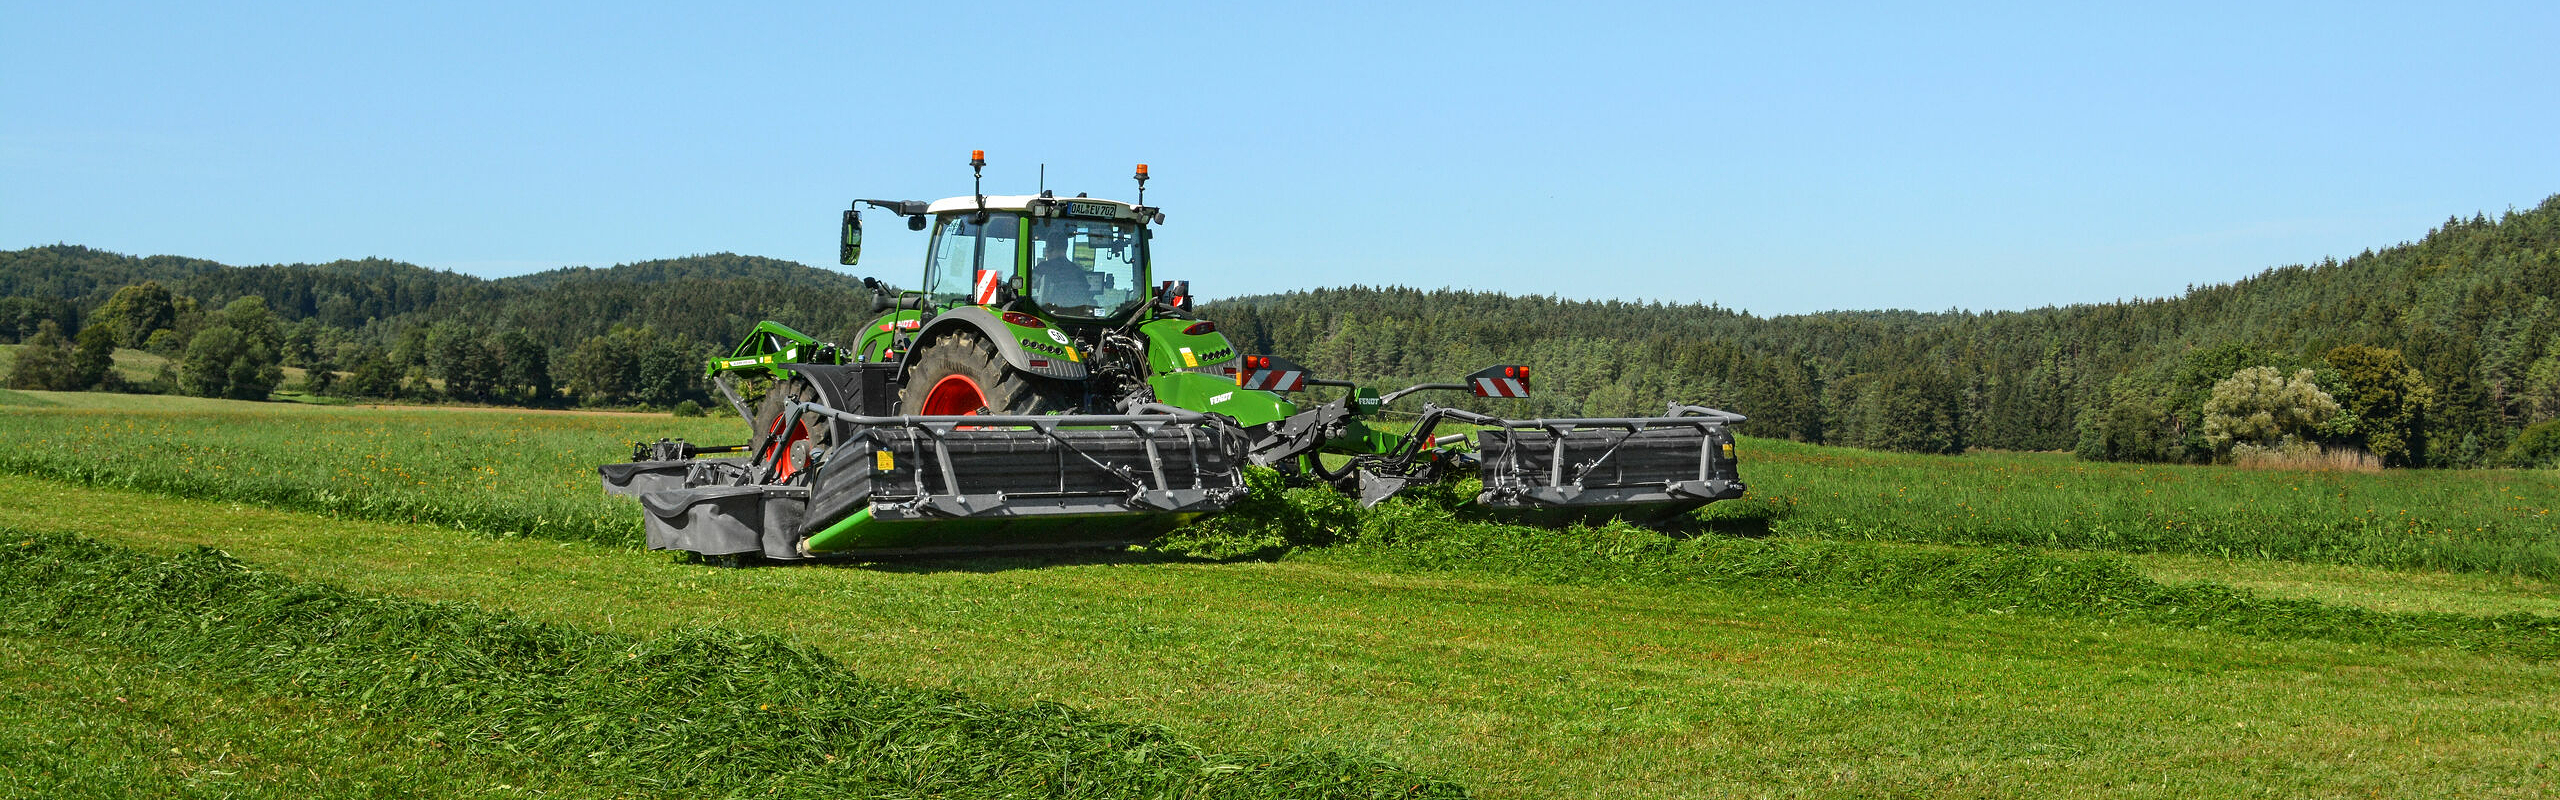 Ein grüner Fendt Traktor im Feld mit angehängter Mähkombination